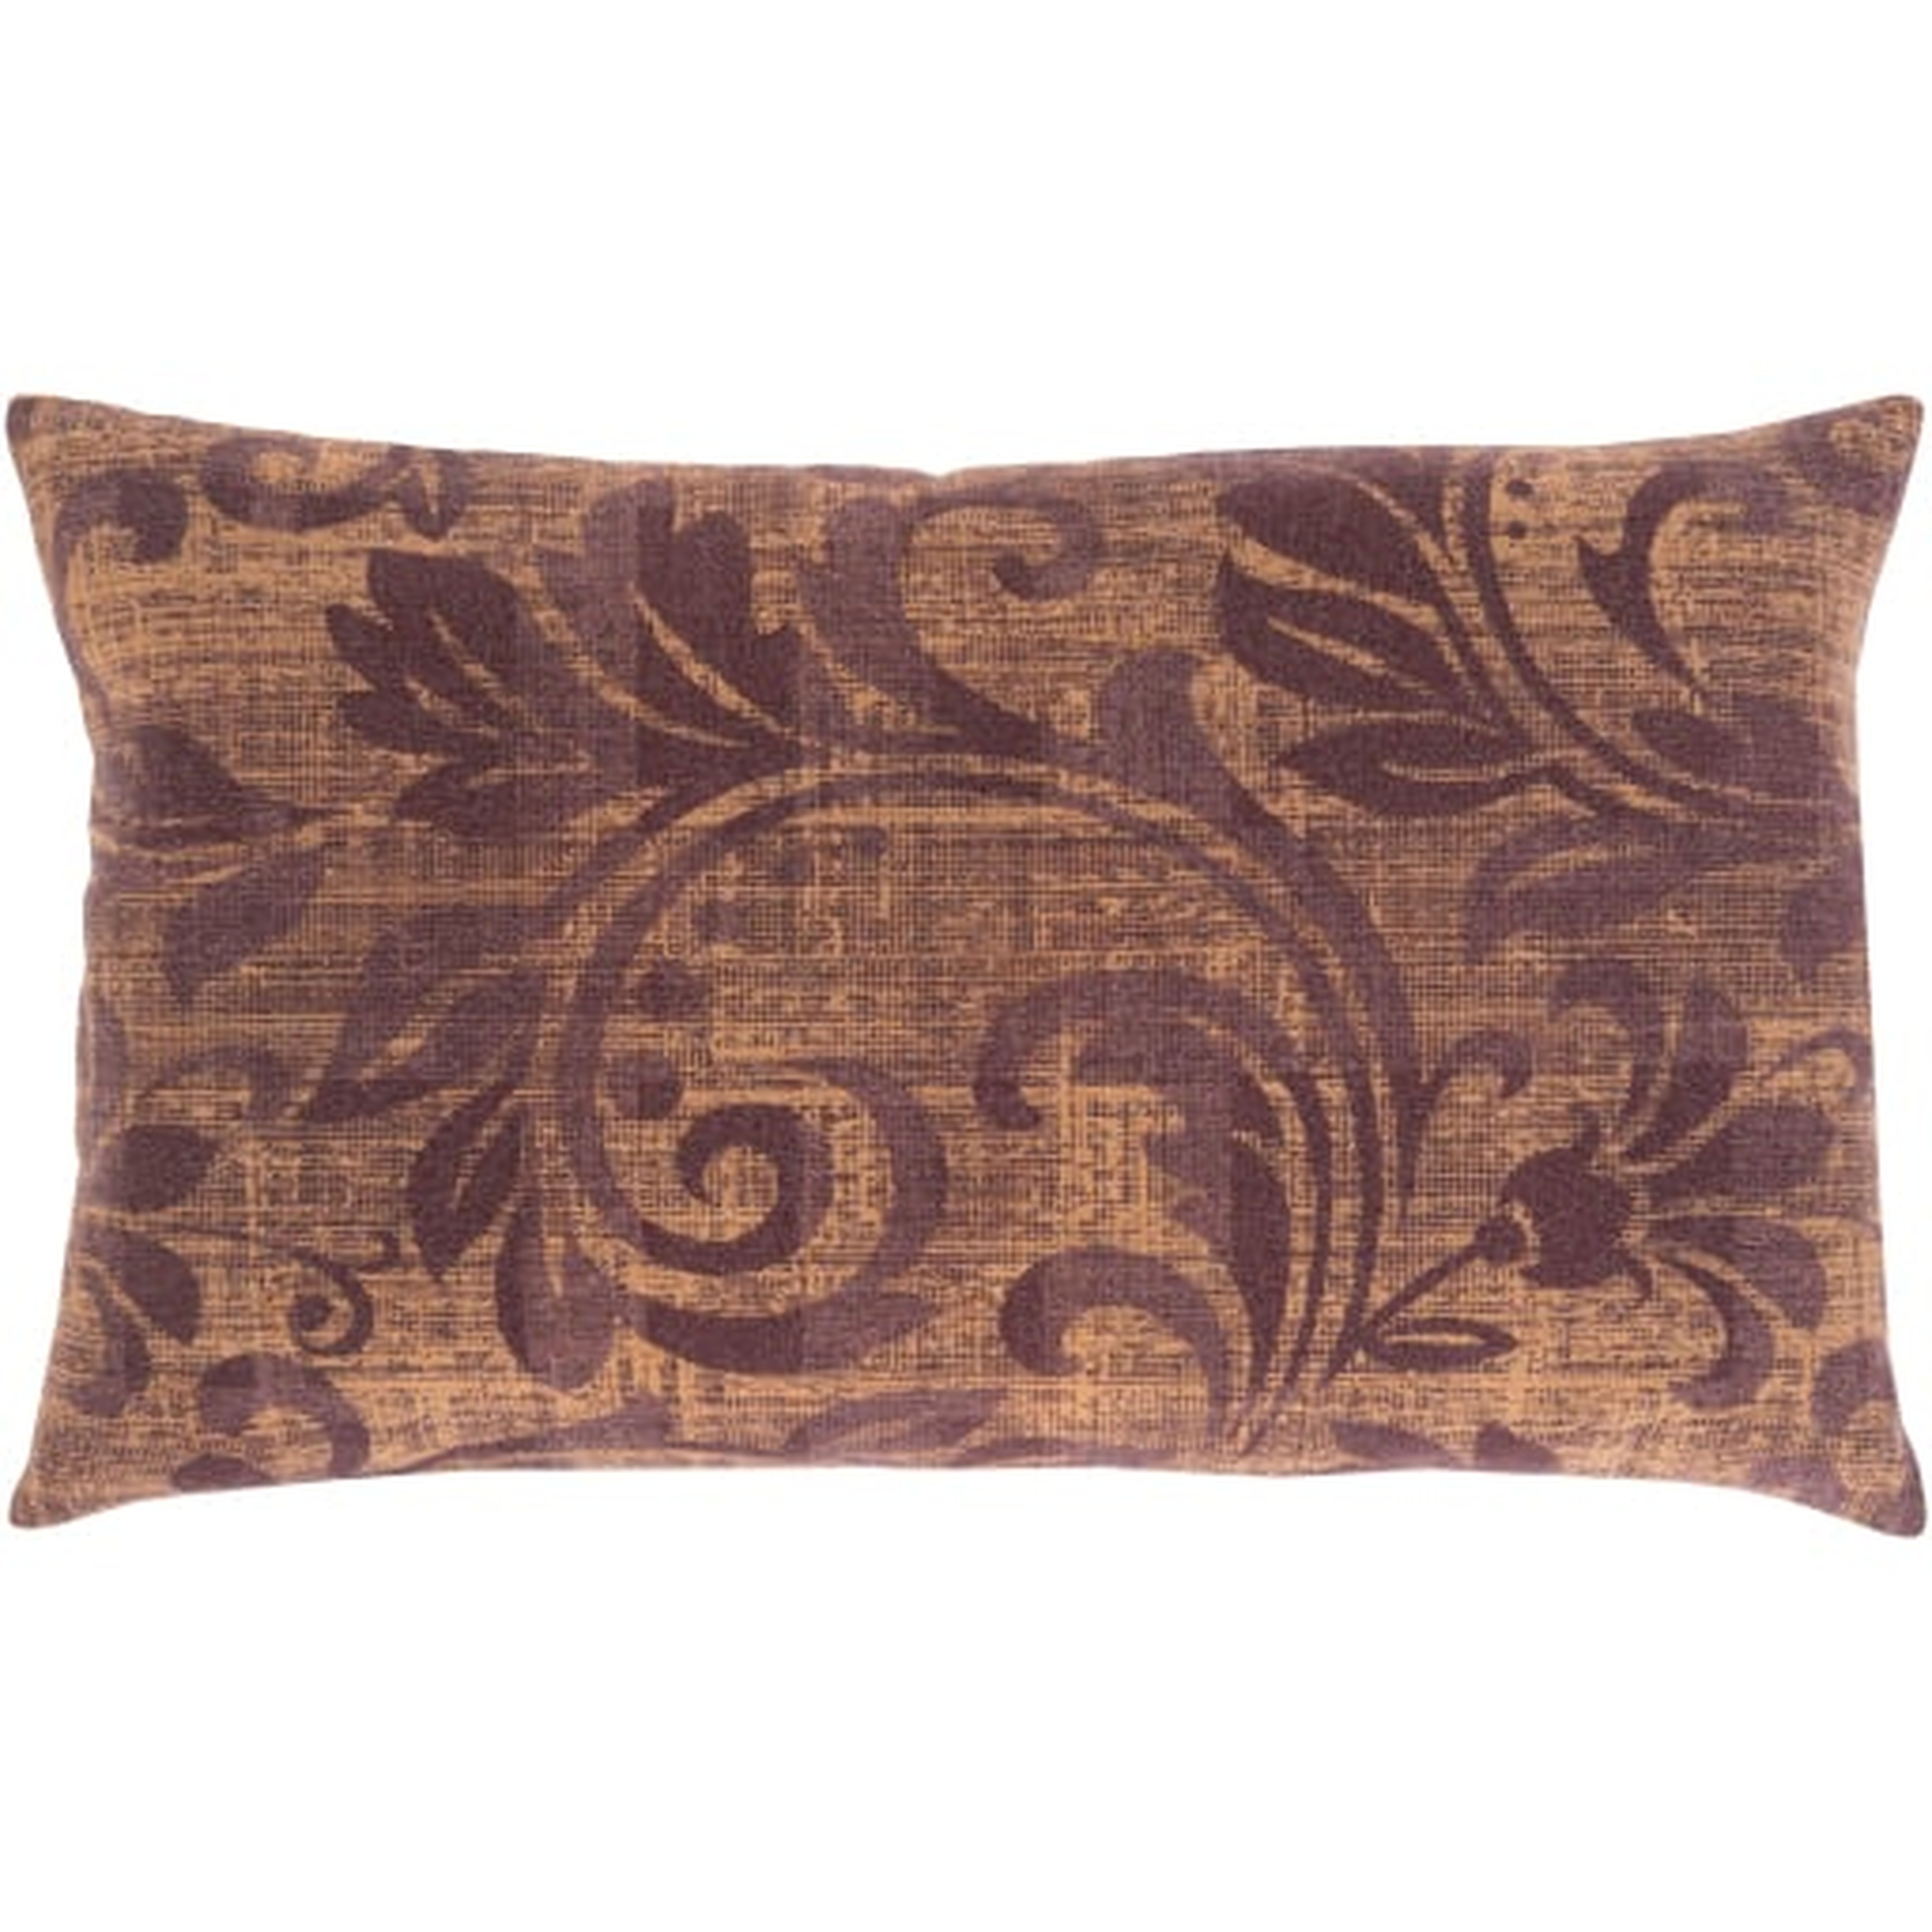 Laurel Lumbar Pillow Cover, 24" x 16", Eggplant - Cove Goods